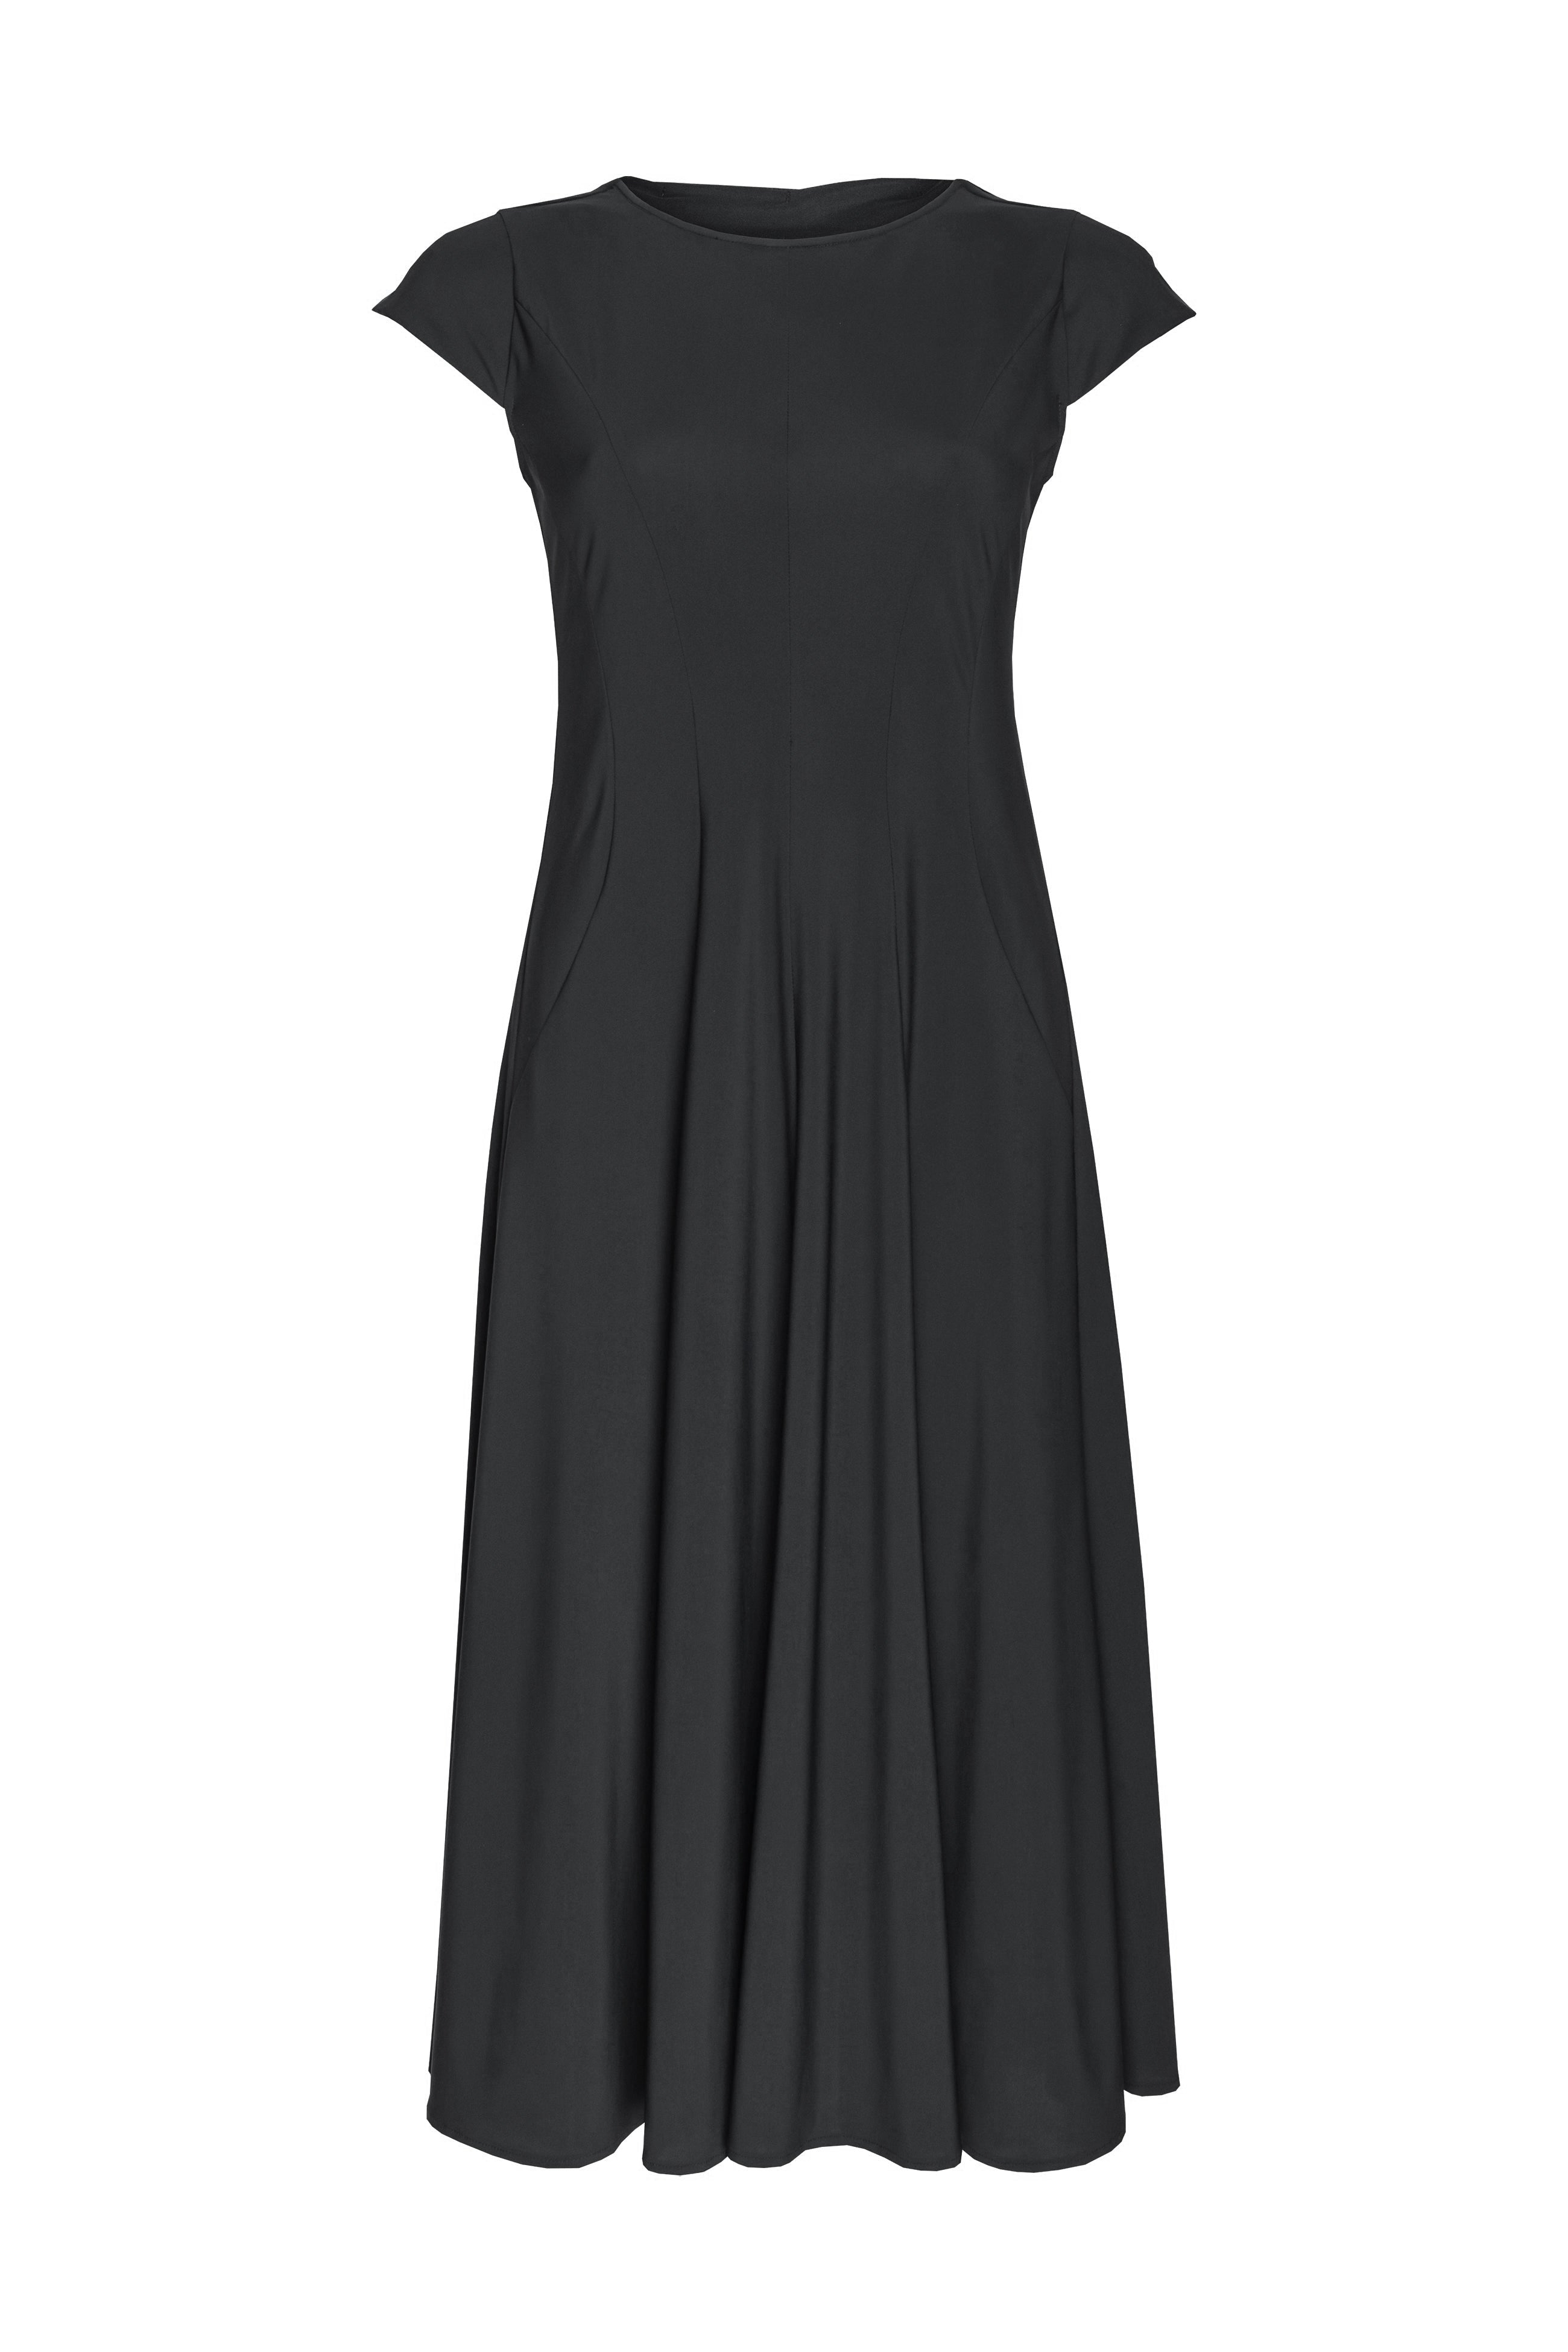 Multi Seam Cap Sleeve Dress - Black 5054